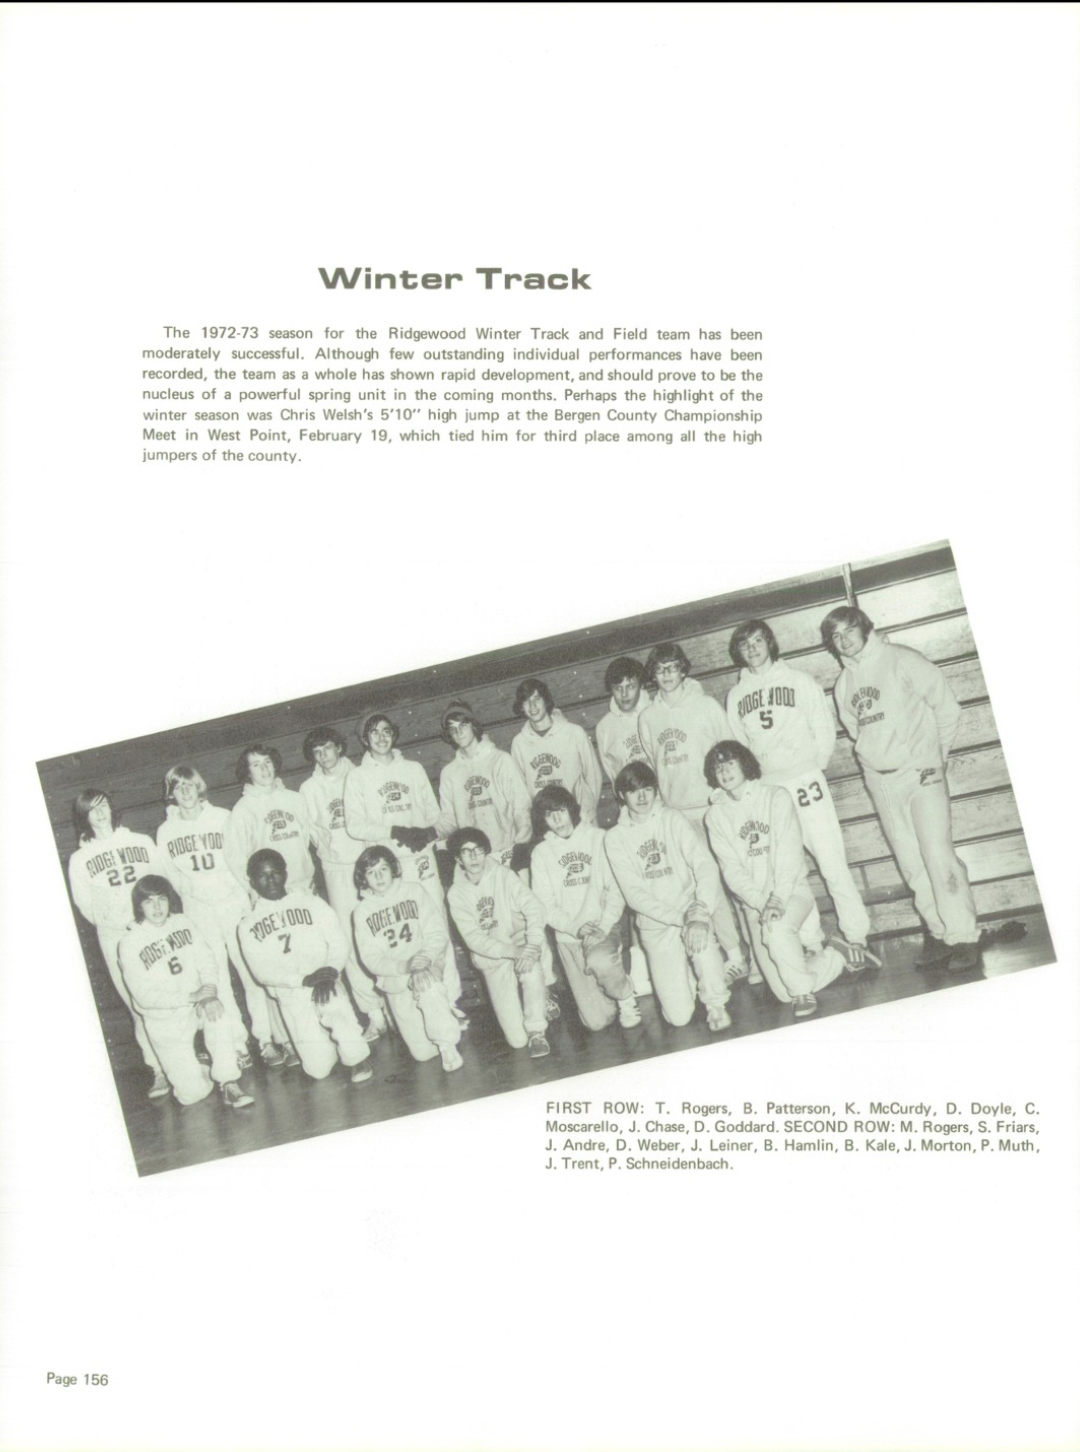 1972-73 Boys’ Winter Track Team